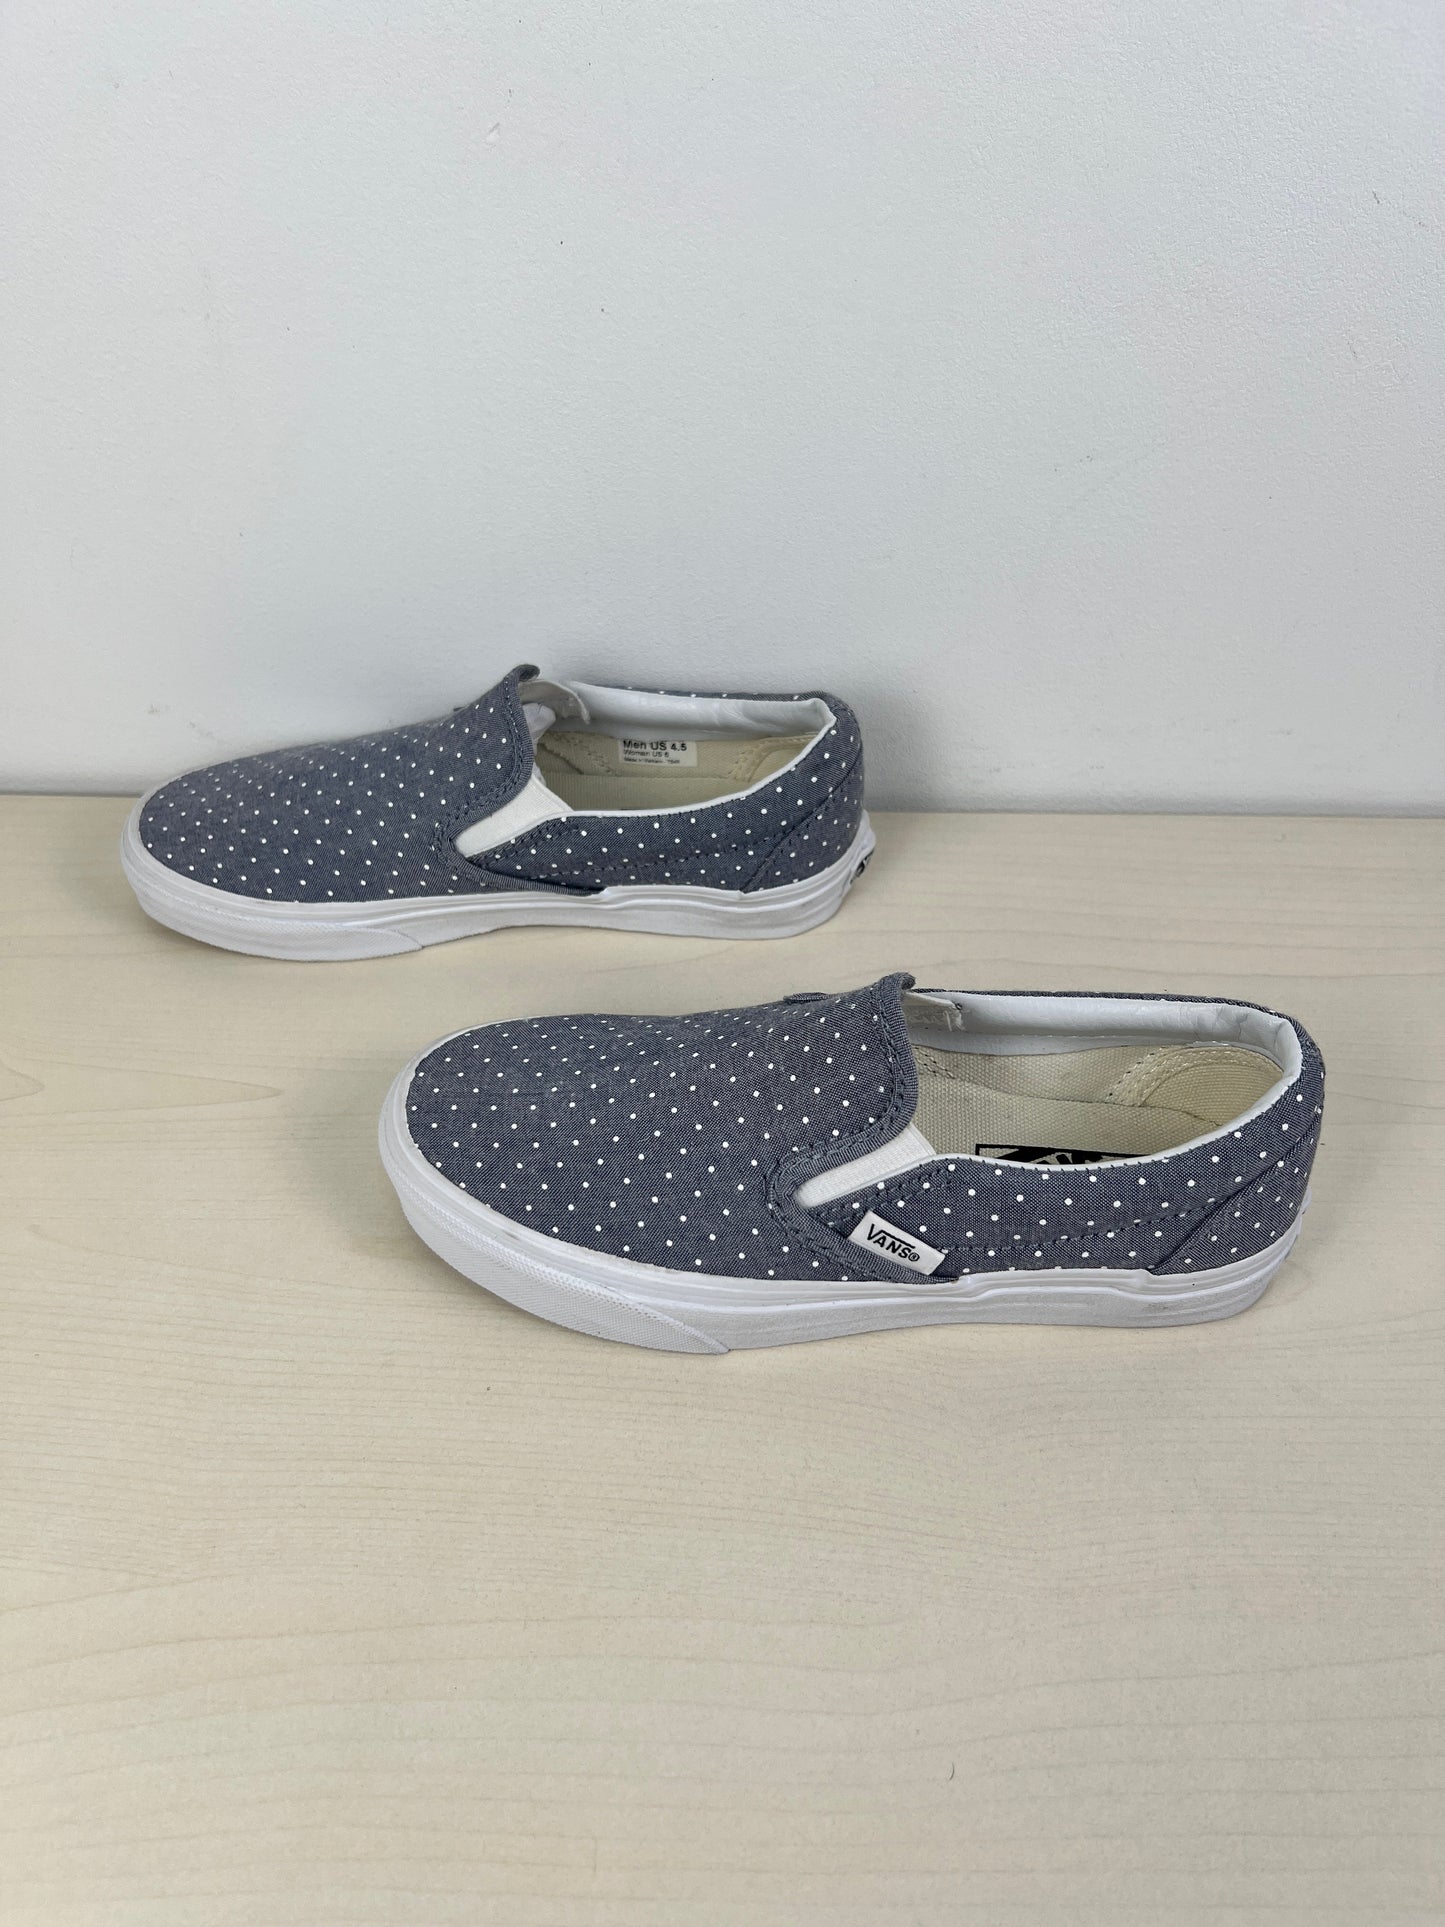 Polkadot Pattern Shoes Flats Vans, Size 6